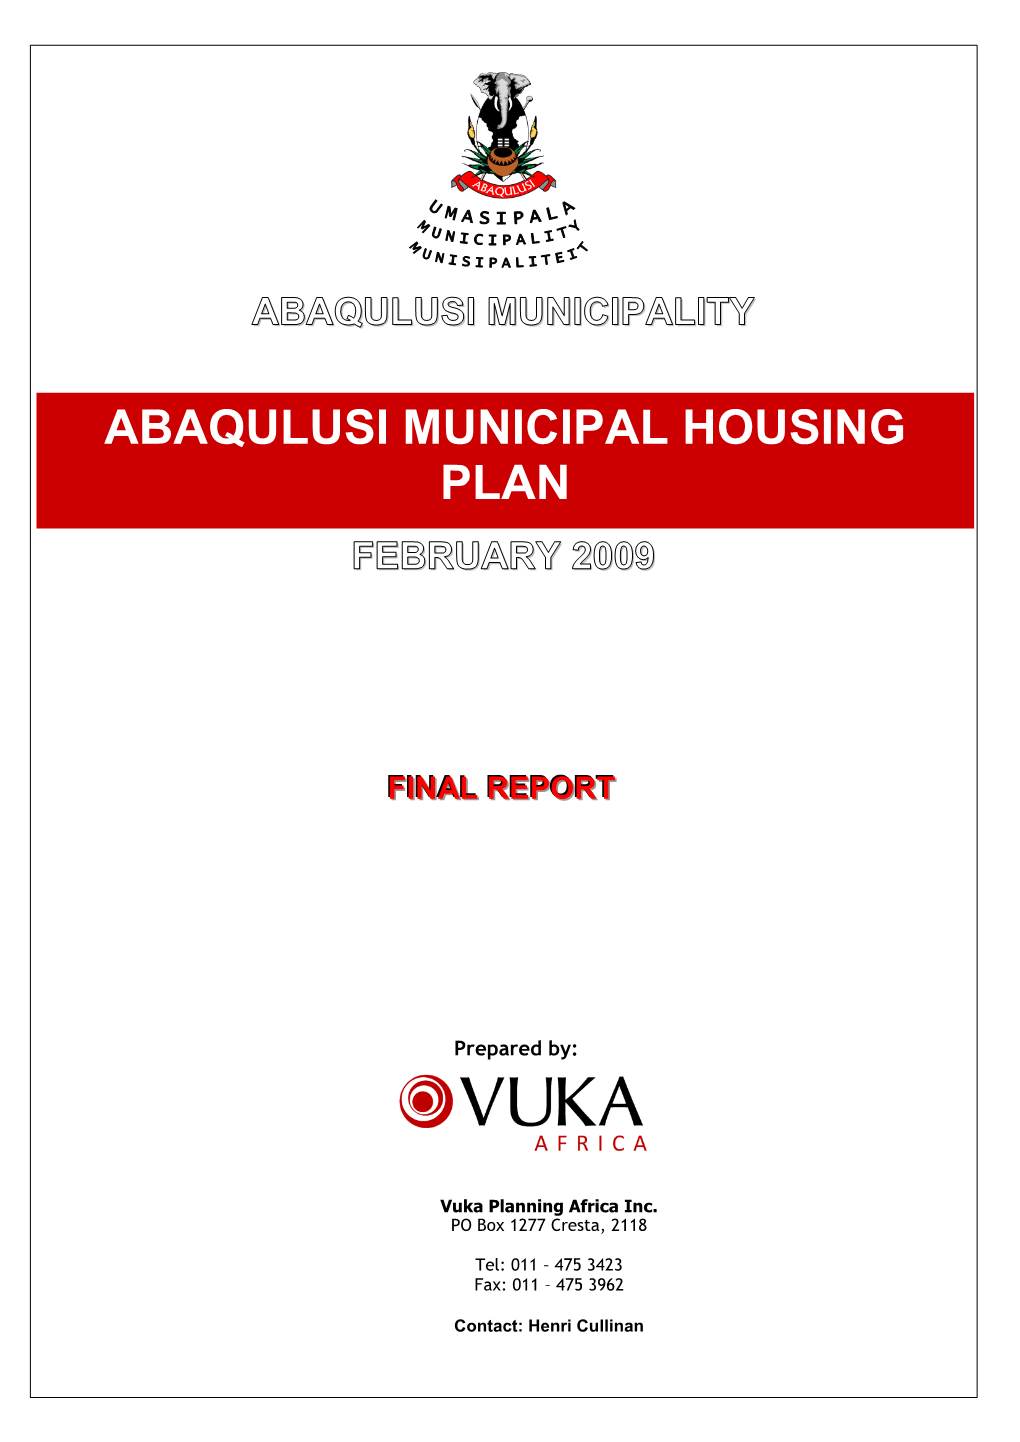 Abaqulusi Municipal Housing Plan (Final Report - February 2009) Vuka Planning Africa Inc